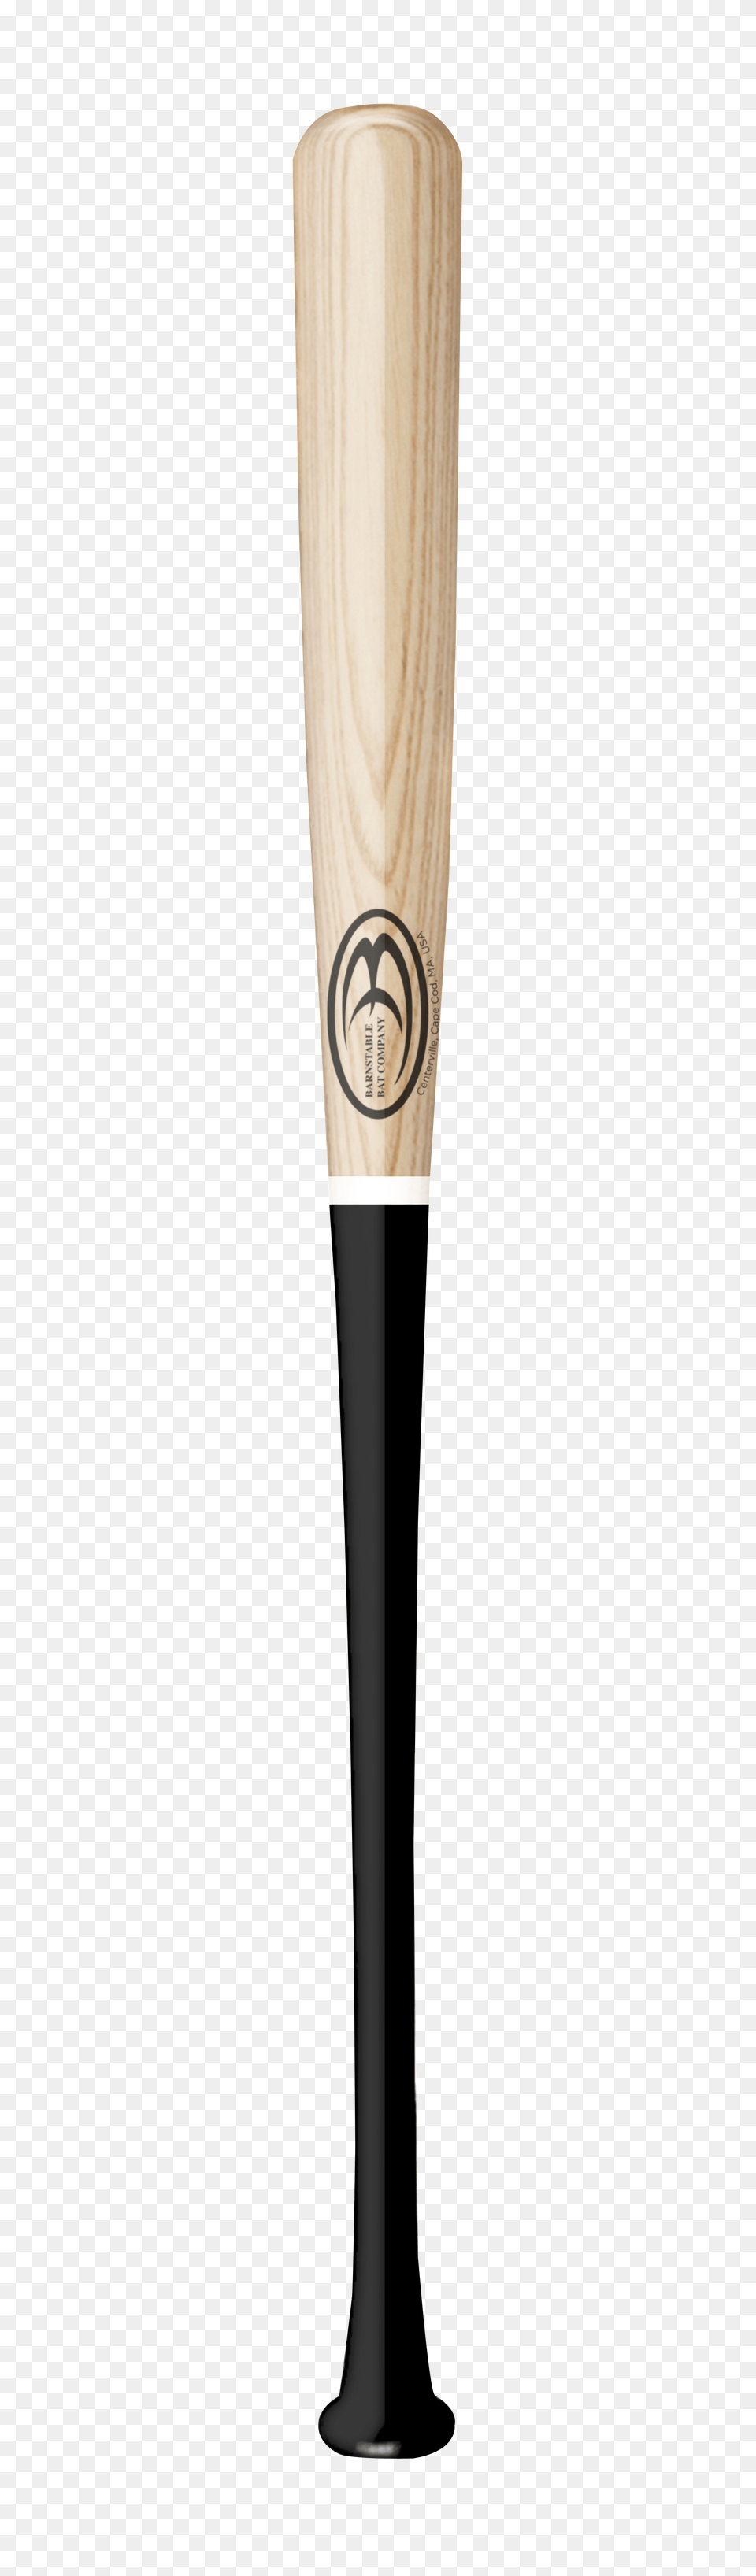 Baseball Bat, Baseball Bat, Sport, Cricket, Cricket Bat Png Image